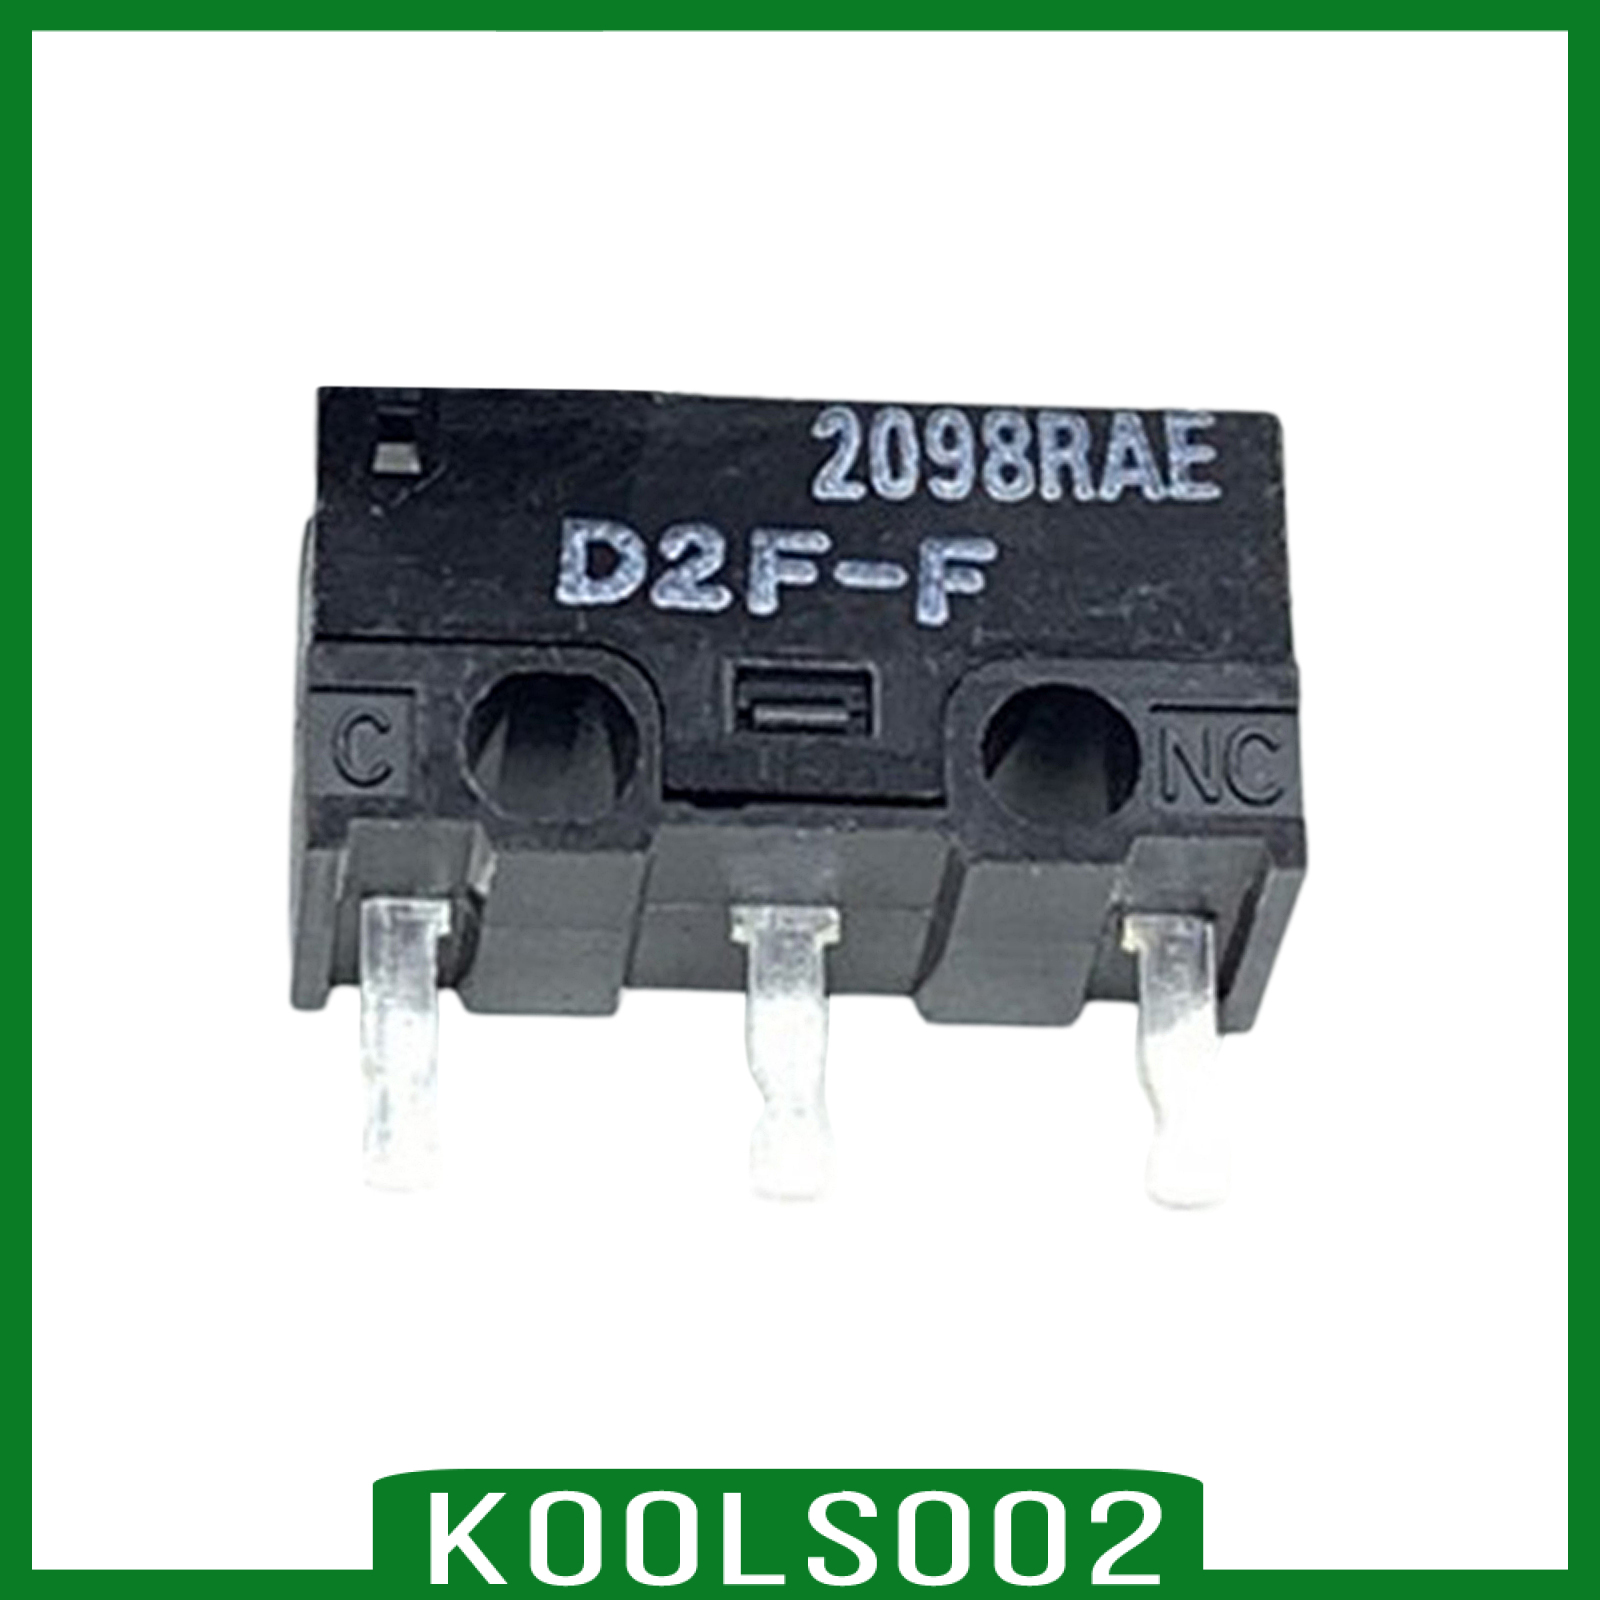 [KOOLSOO2]Micro Switch Microswitch for Mouse D2FC-F-7N(10M) D2FC-F-7N(20M) D2FC-F-7N(10M)(of) D2FC-F-7N(20M)(of) D2FC-FL-NH D2FC-FK(50M) D2F-F D2F-01F-T